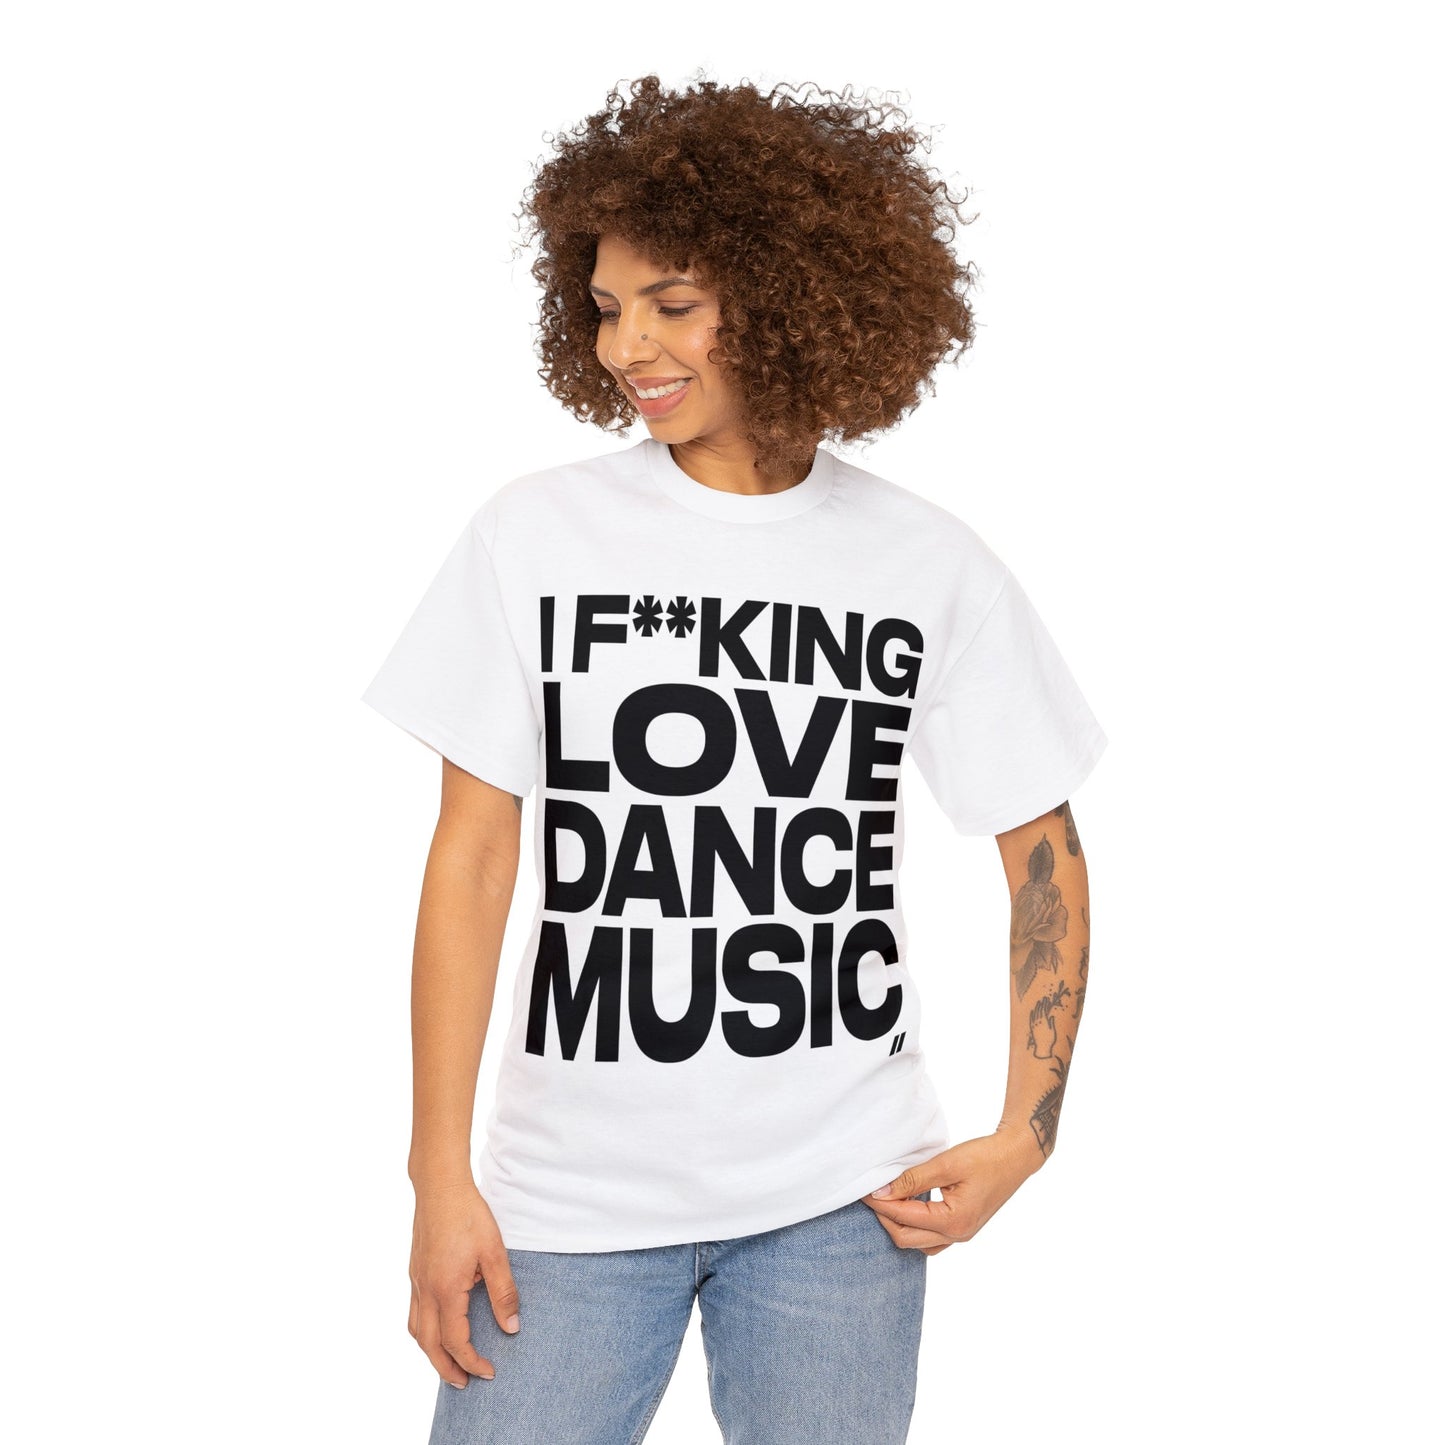 I F**king Love Dance Music Tee (Black / White)